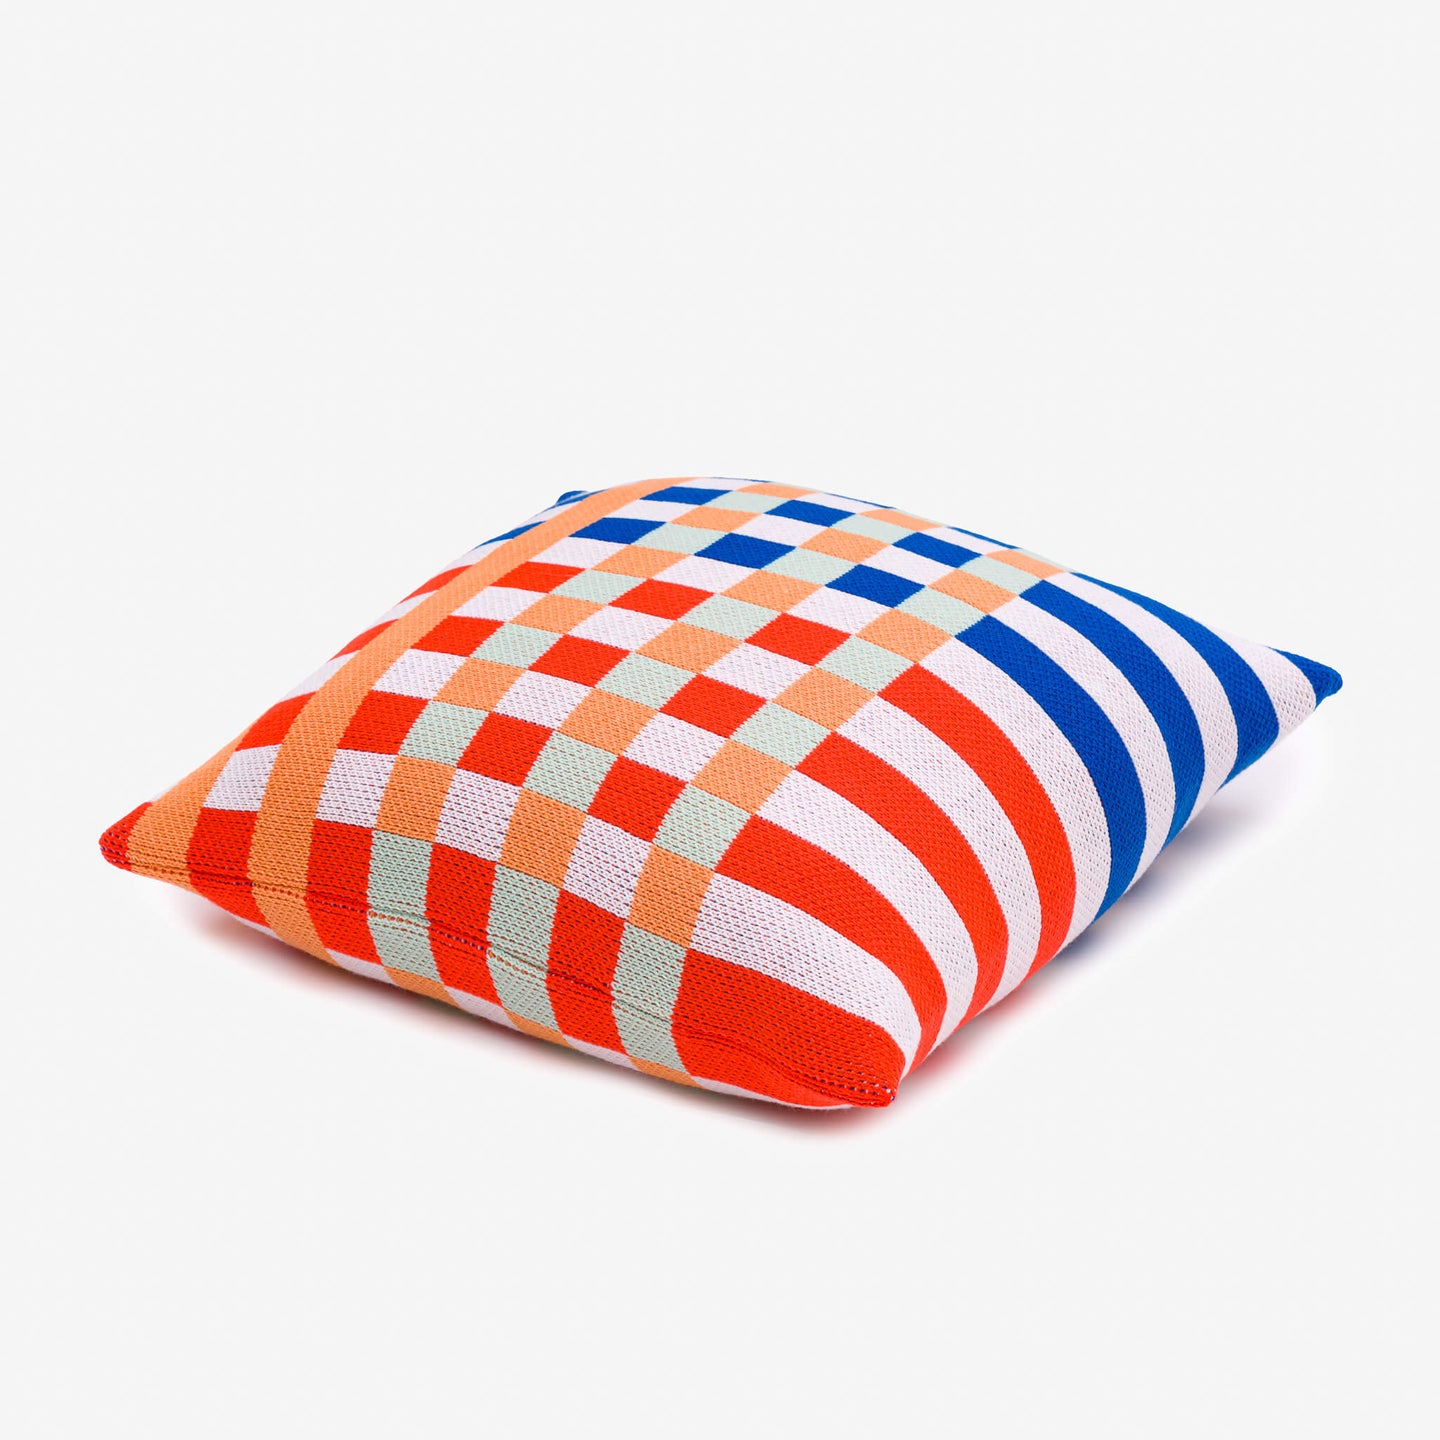 Square Square Stripe Gingham Checkerboard Knit Pillow Case